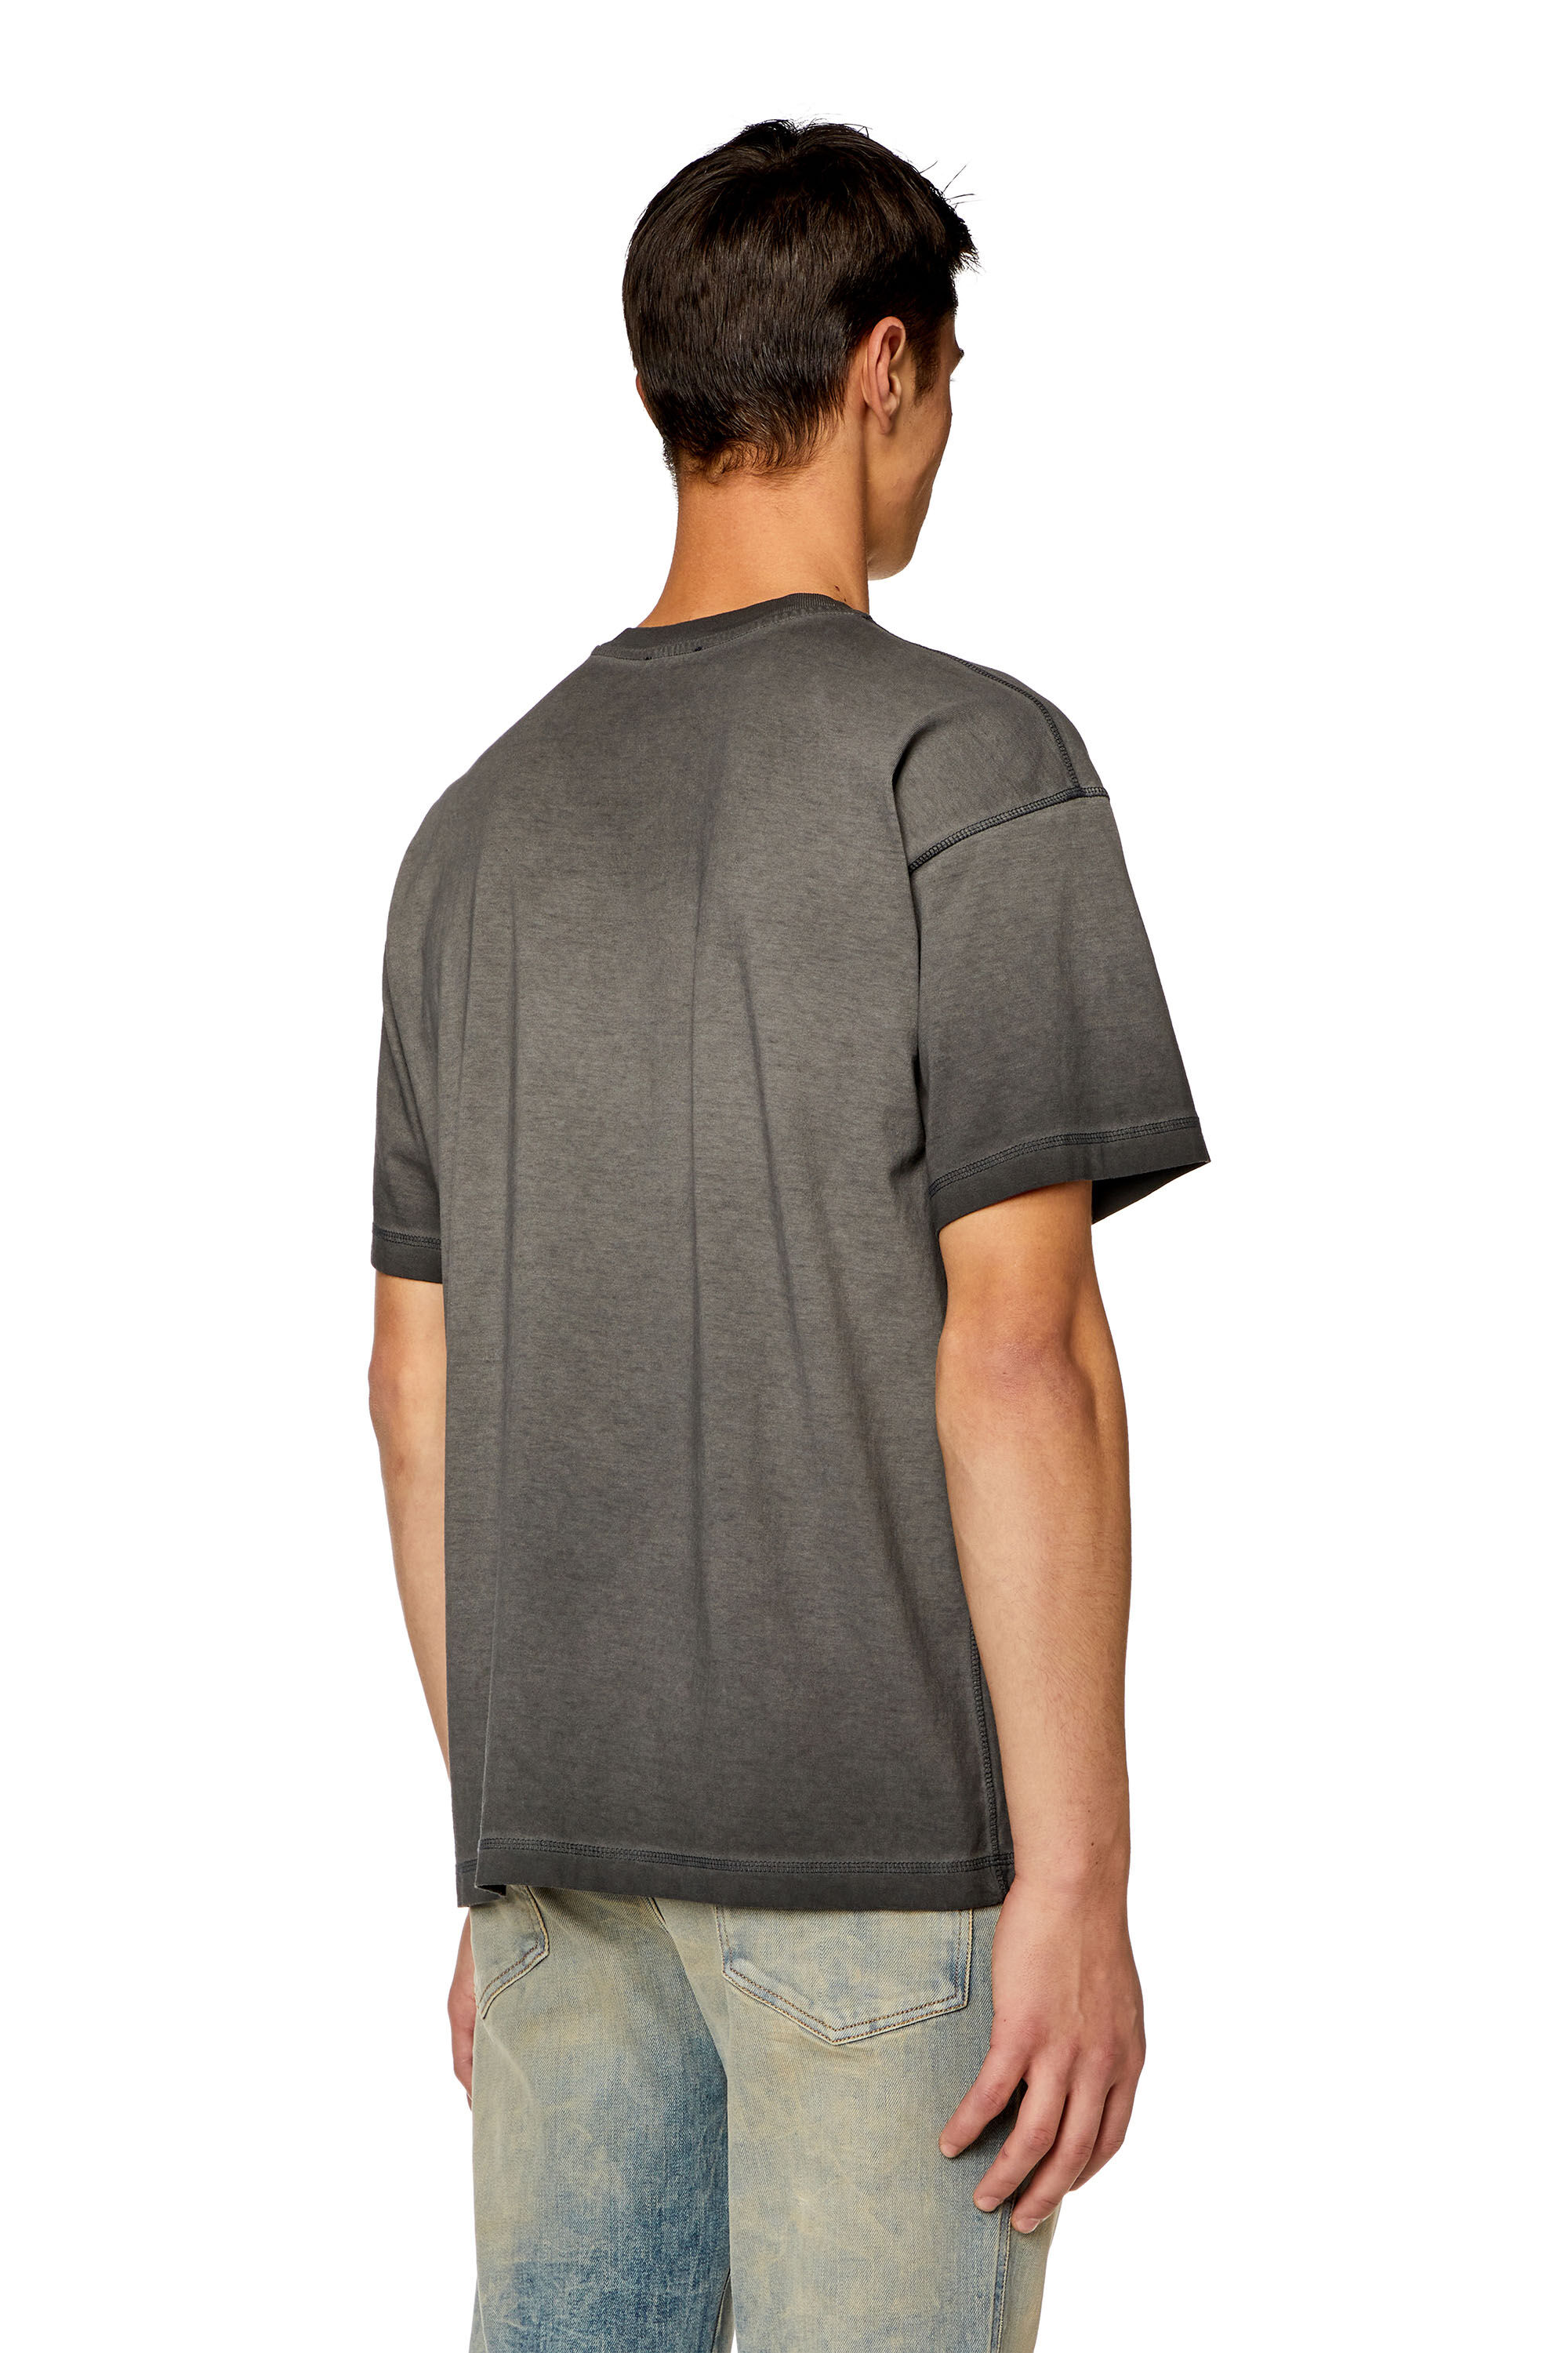 Men's T-shirt with heart print | Grey | Diesel